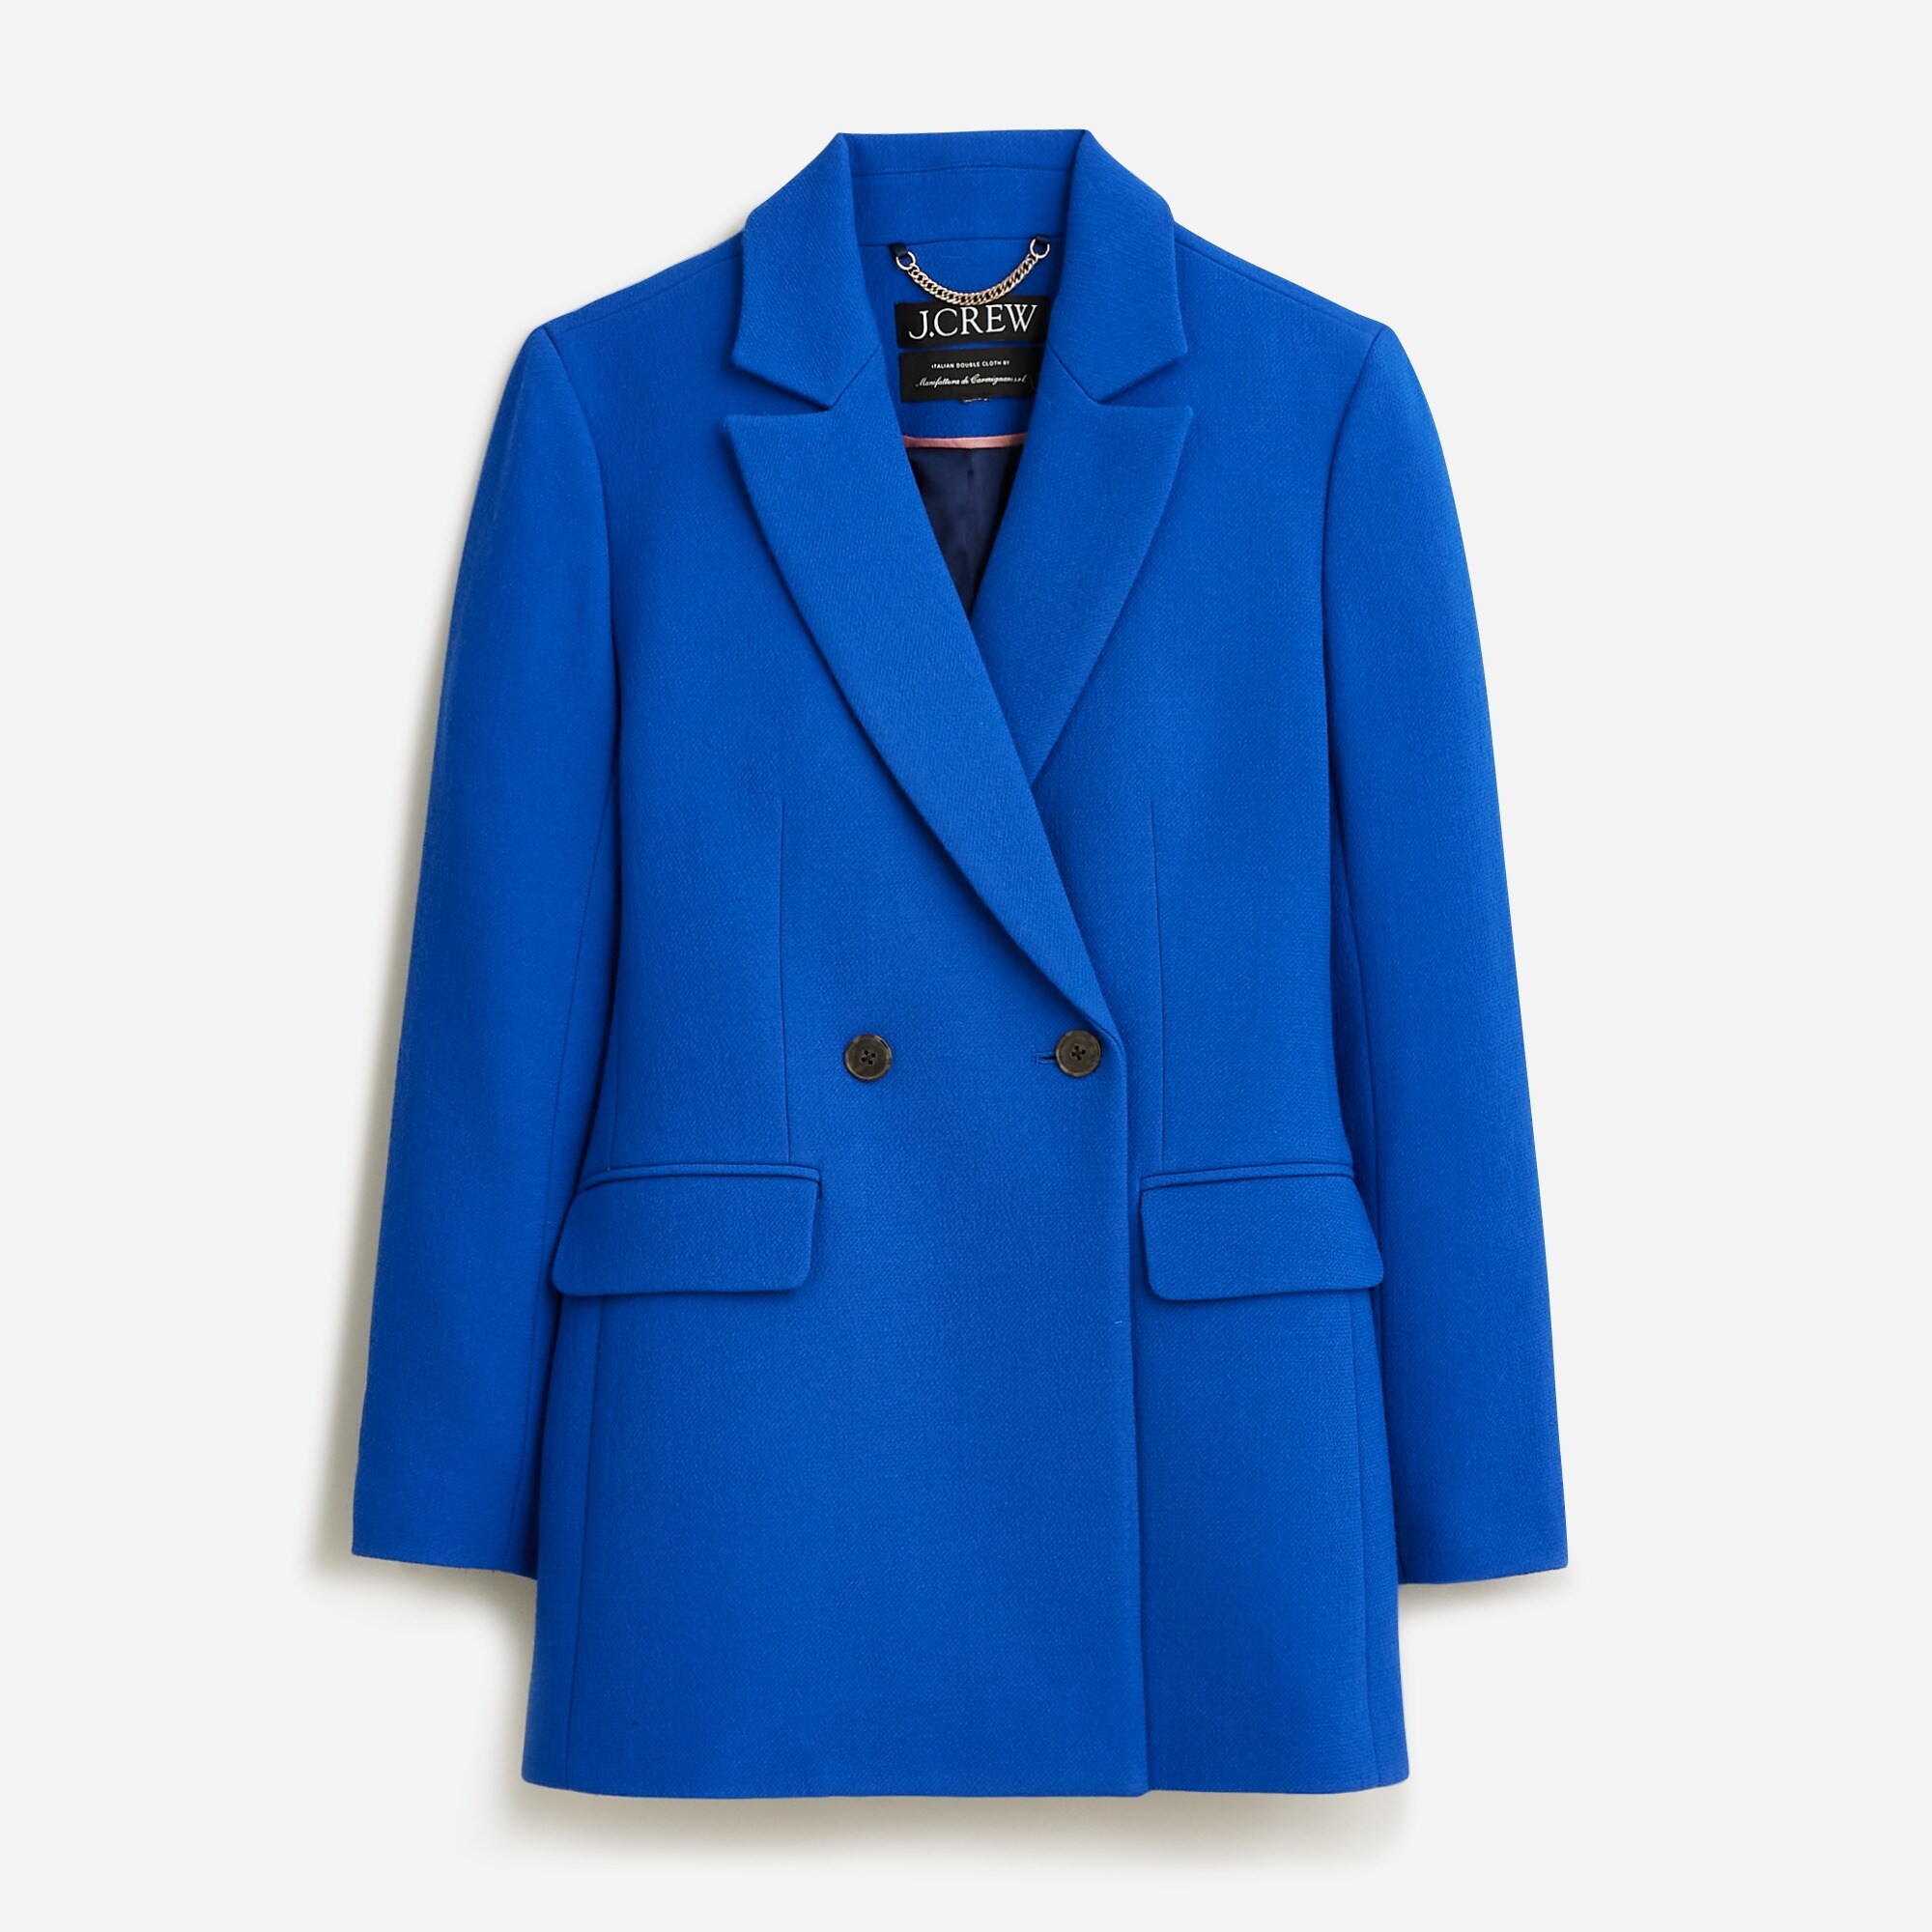  Evening blazer-jacket in Italian double-cloth wool blend